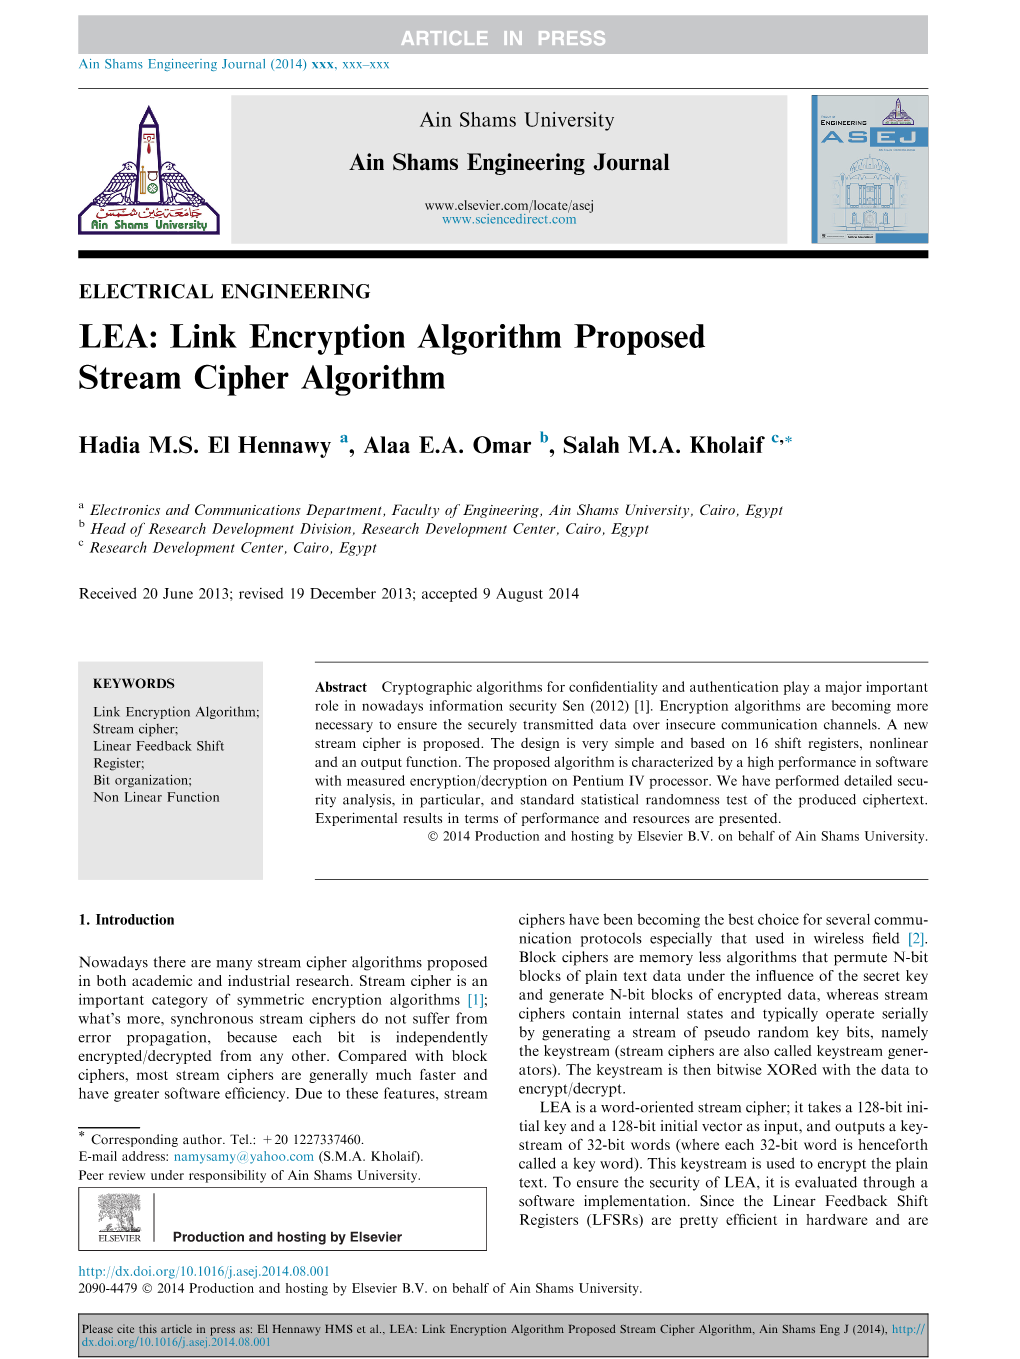 LEA: Link Encryption Algorithm Proposed Stream Cipher Algorithm